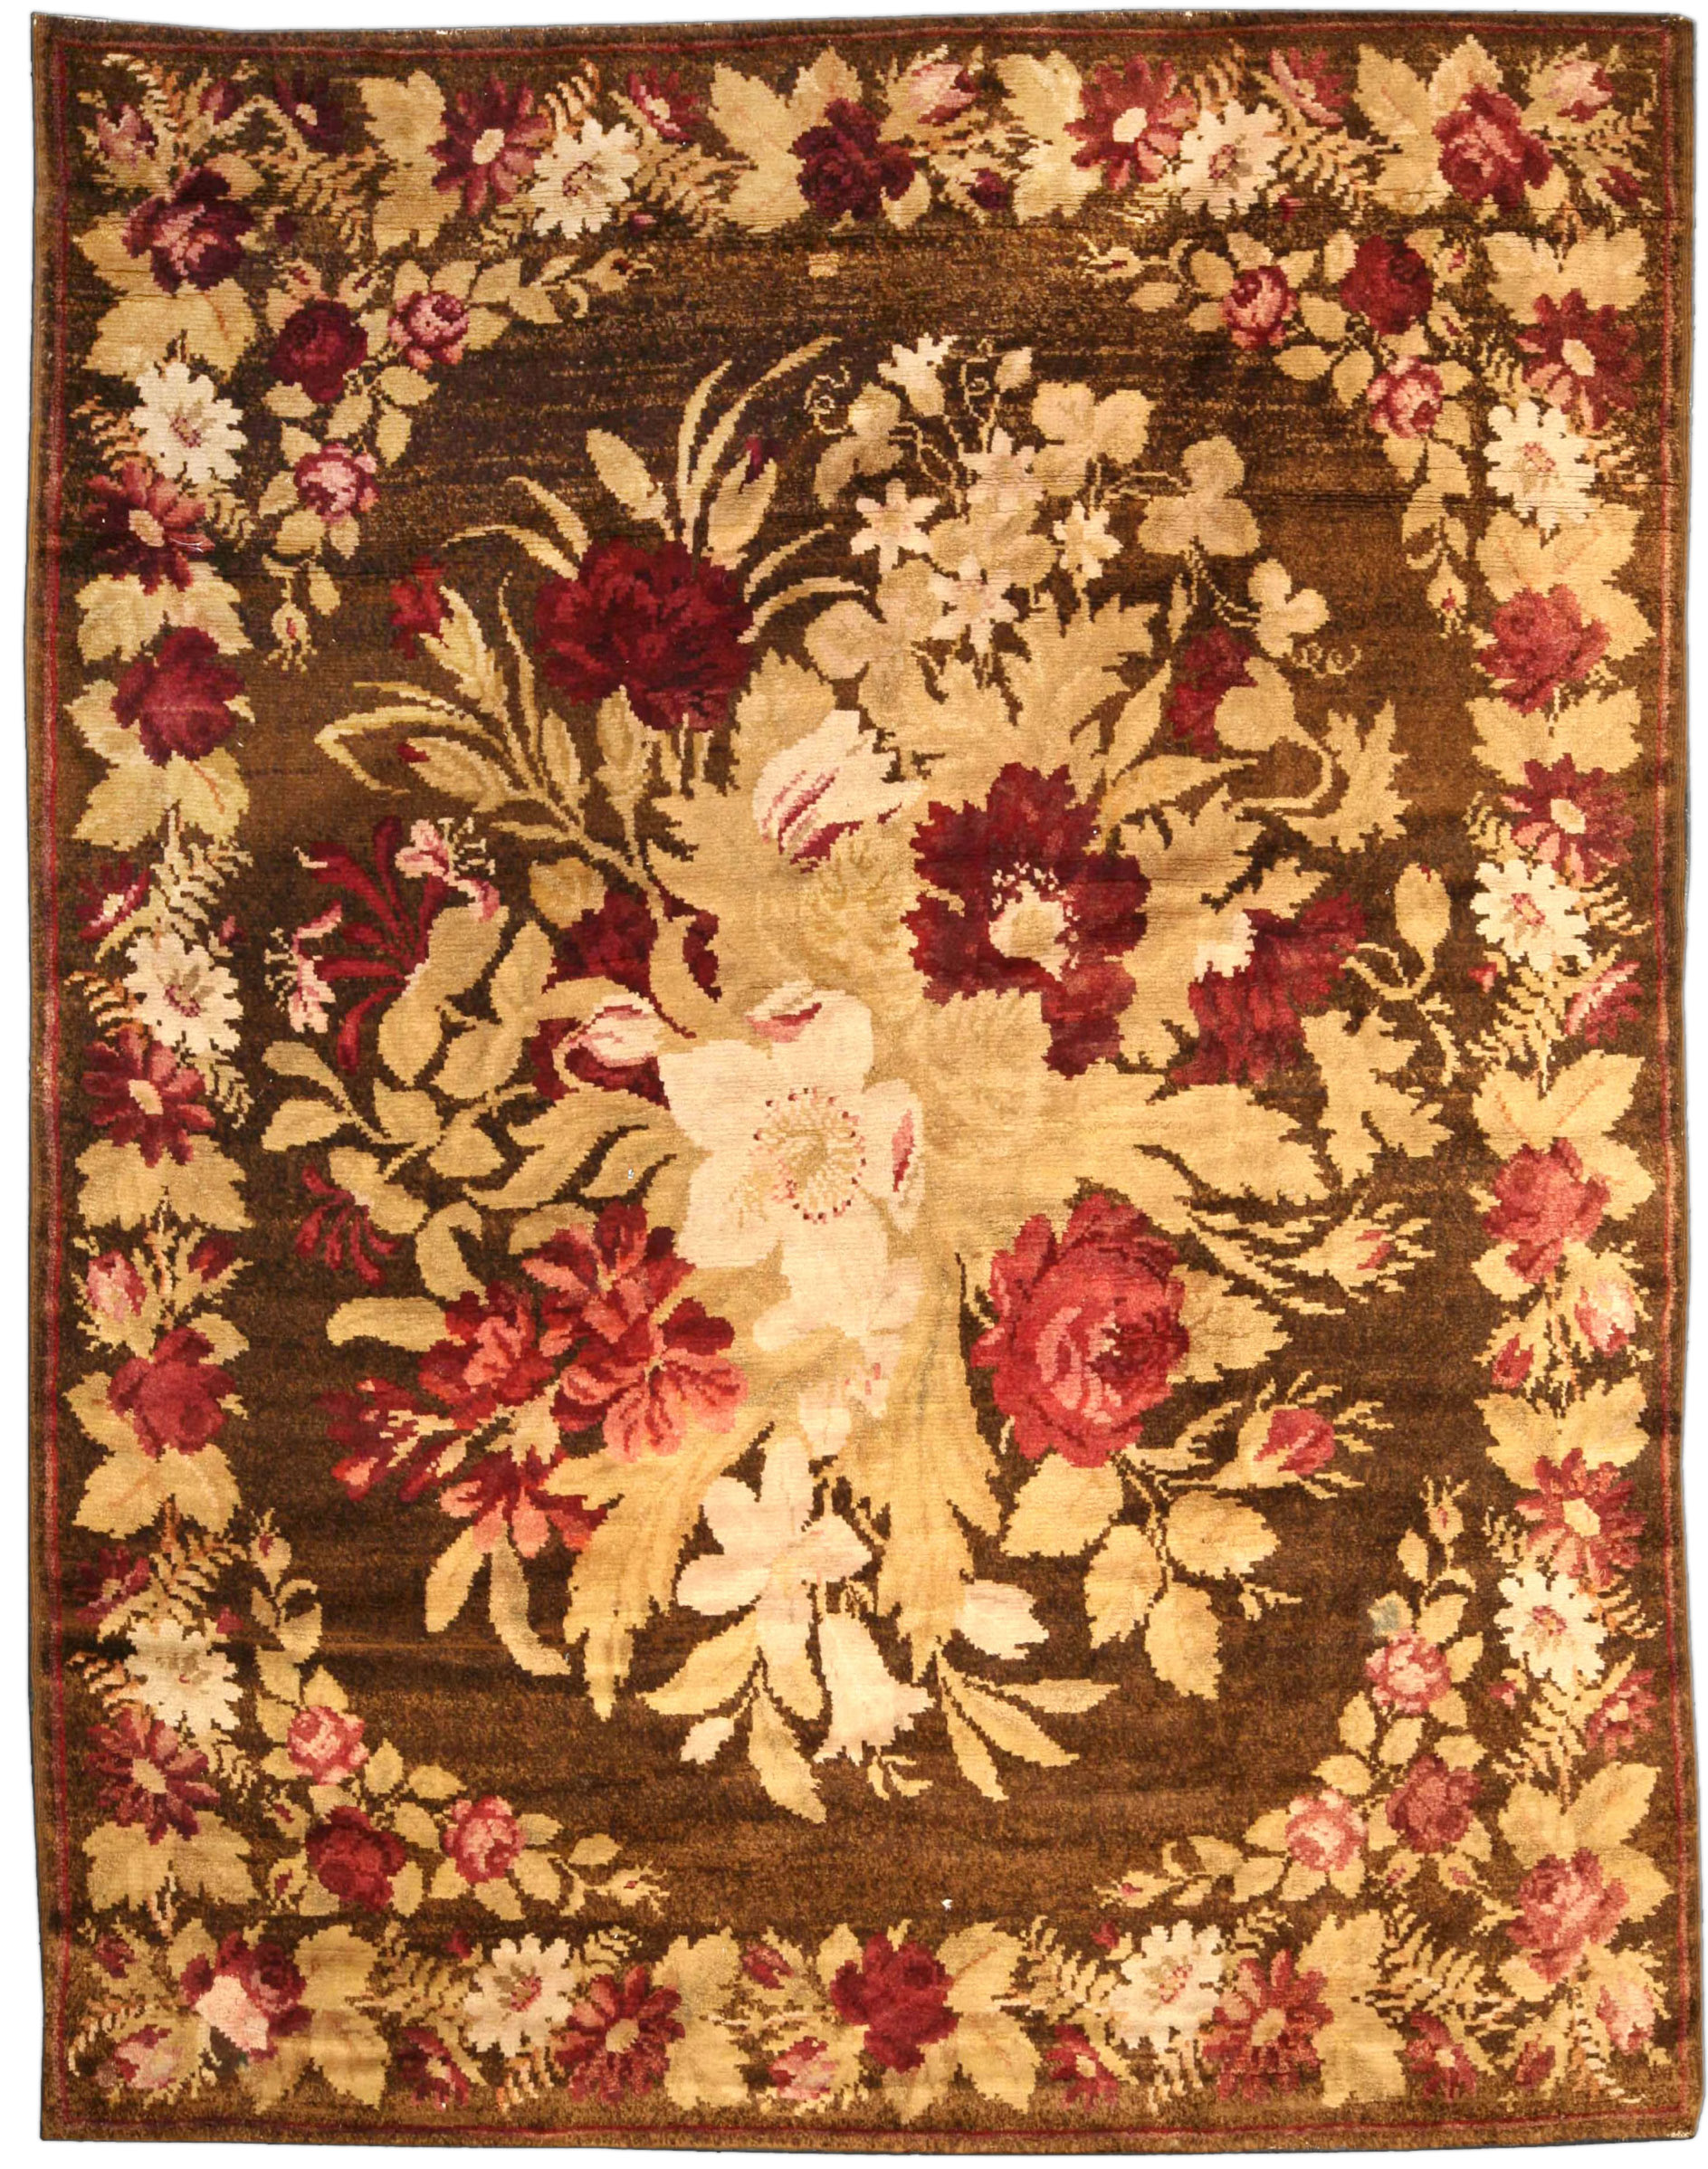 Vintage tapestry Vintage Carpet tapestry Ukrainian carpet Soviet decor